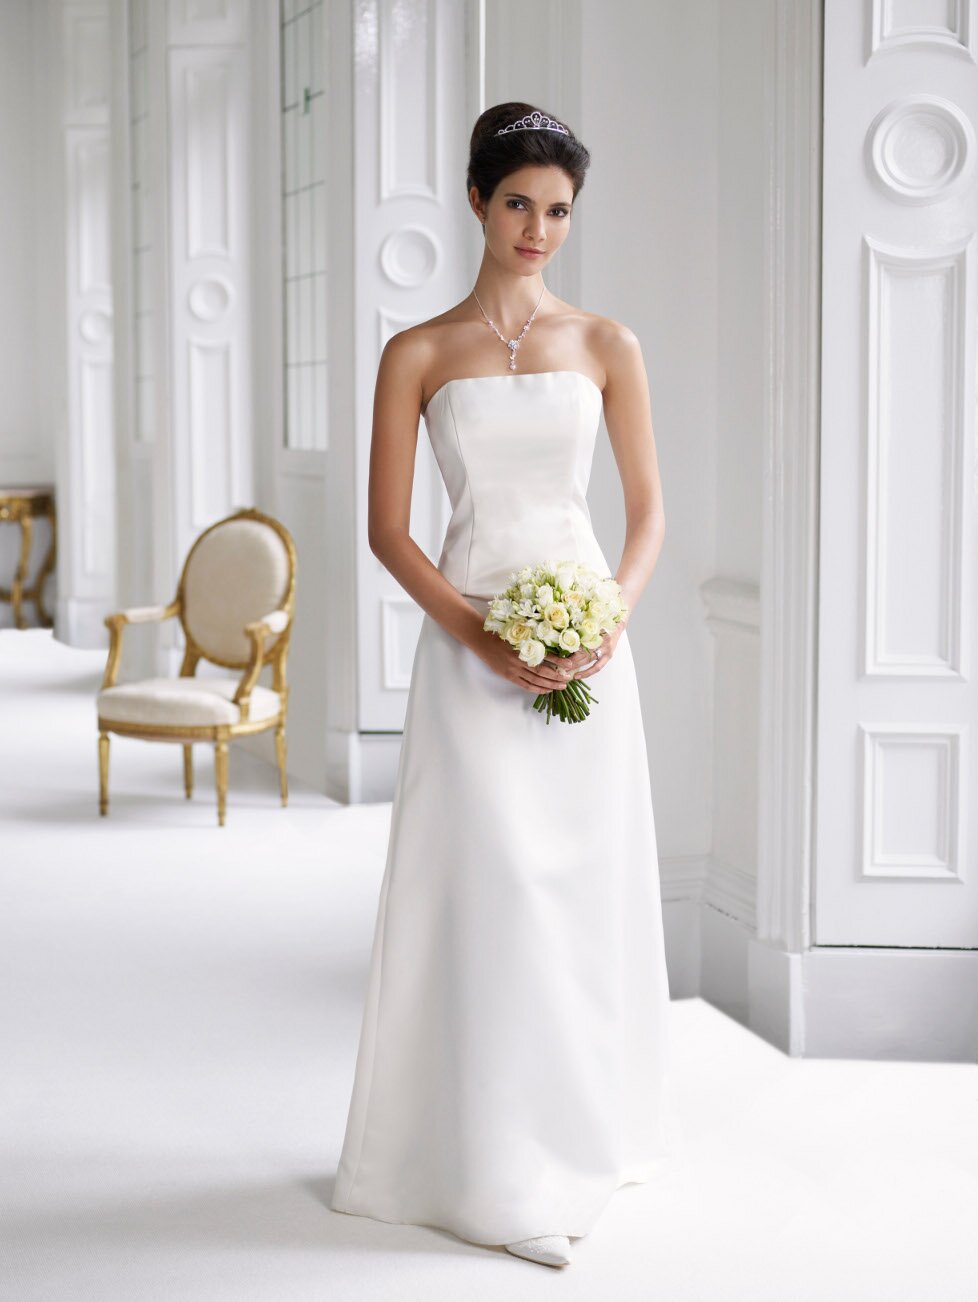 Top wedding dresses styles Photo - 2